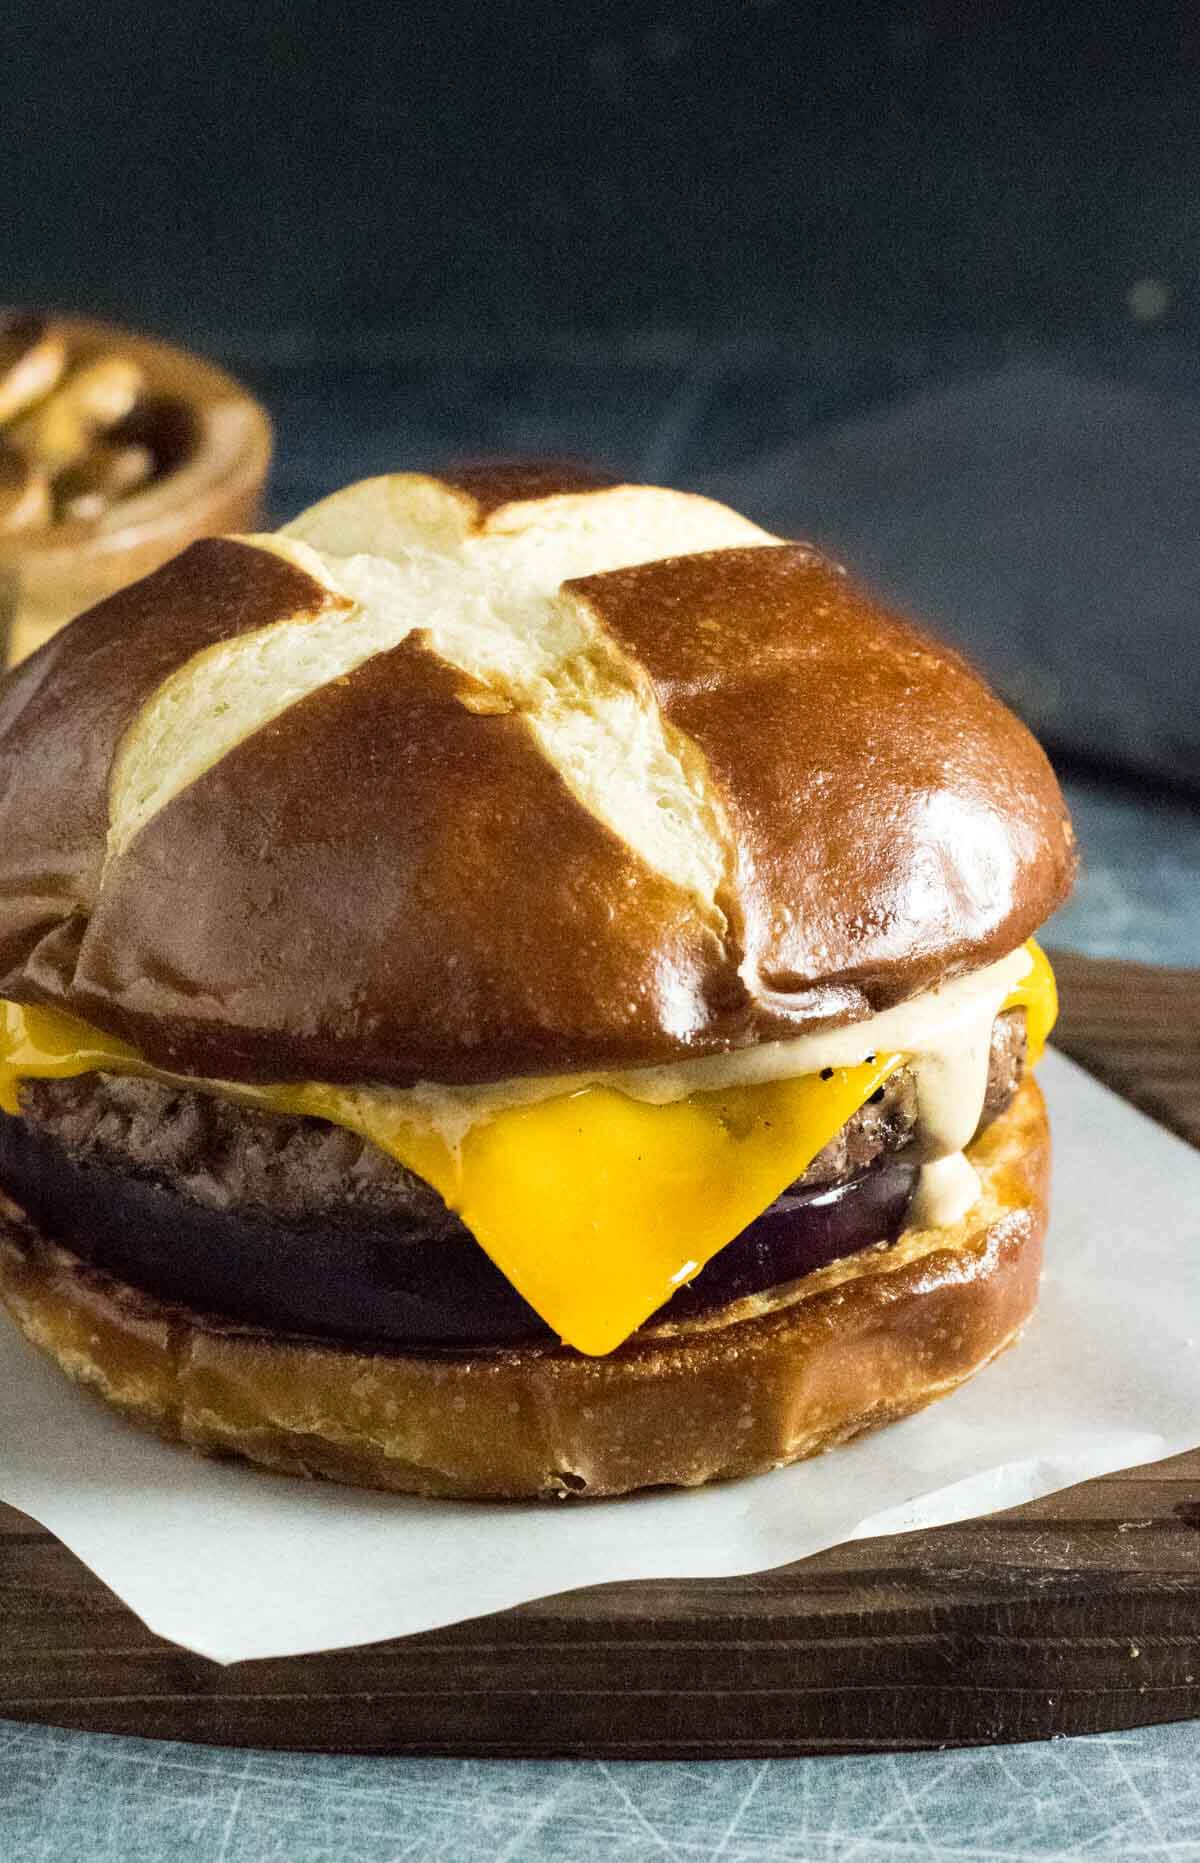 Smoked burger on pretzel bun.